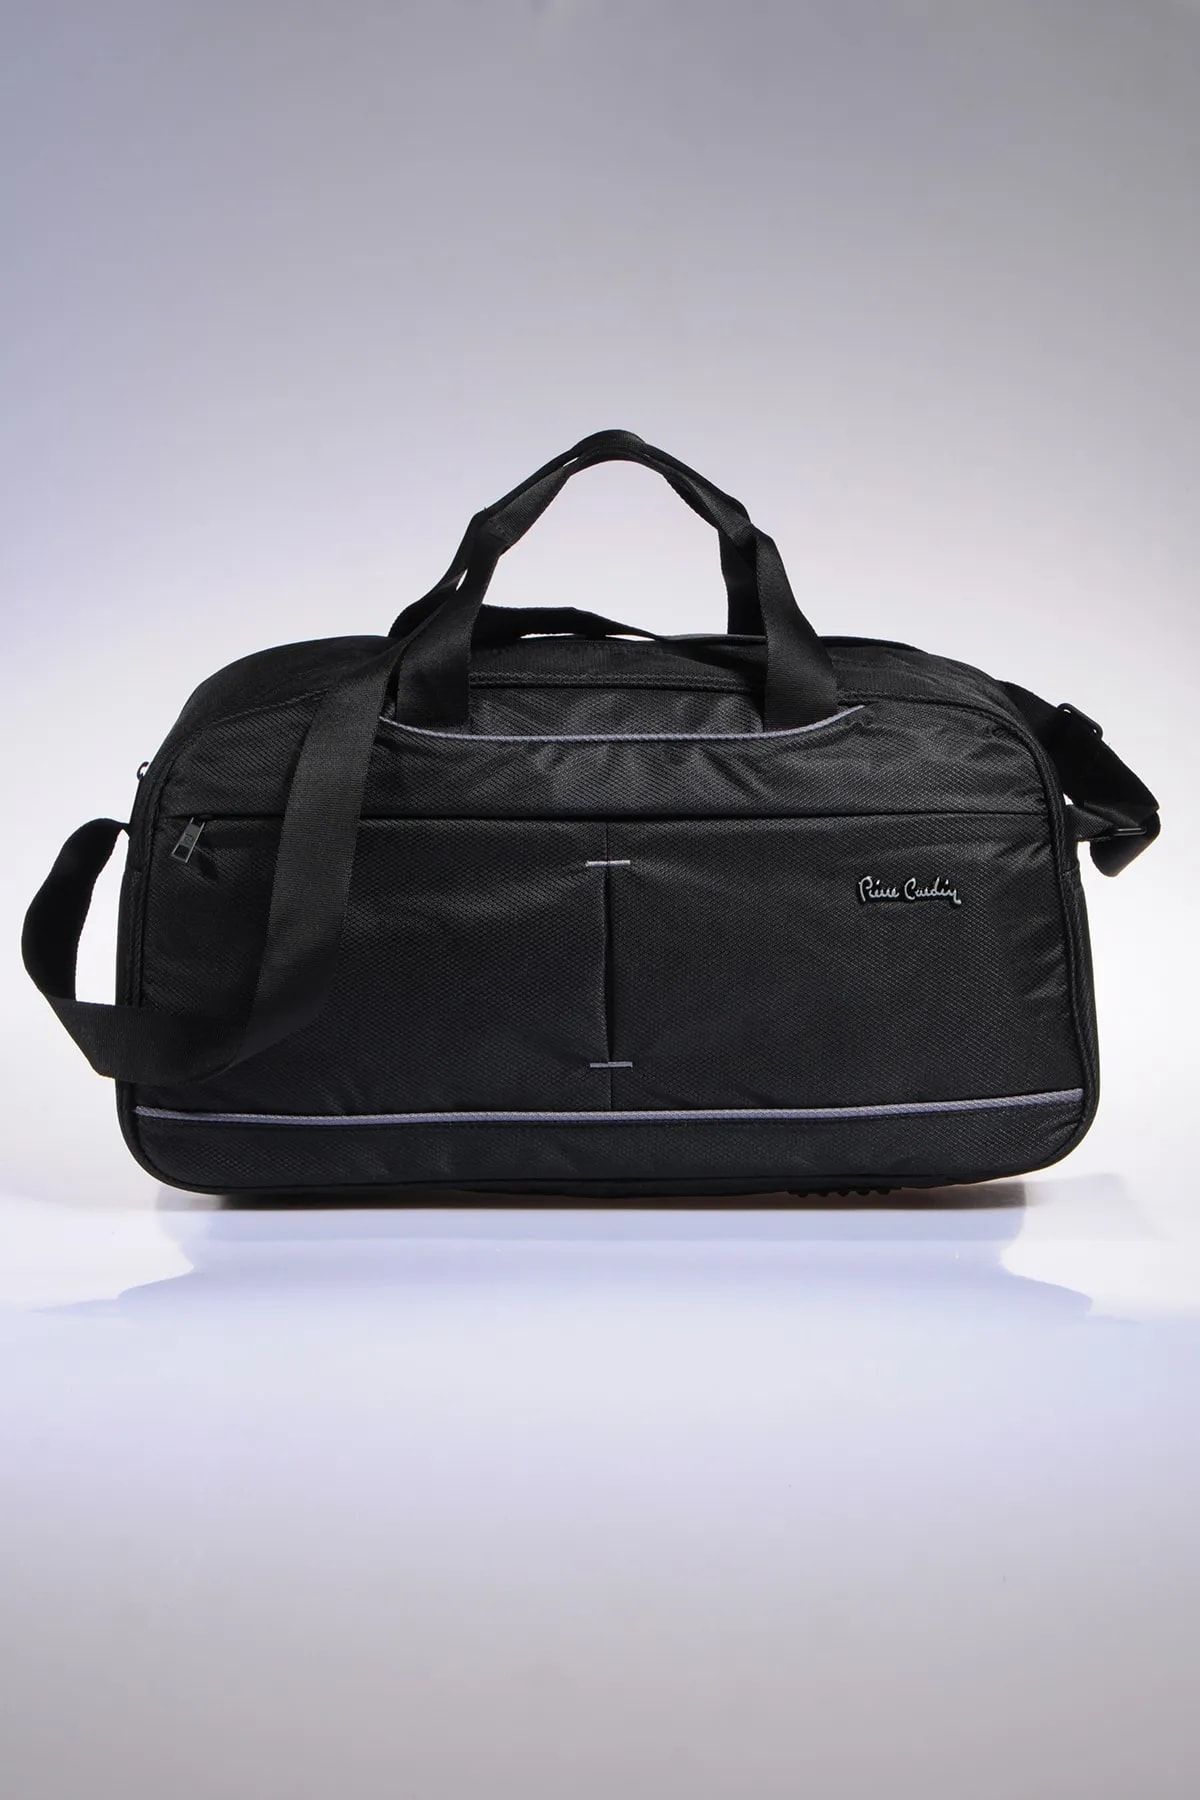 Pierre Cardin چمدان دستی یونیسکس و کیف ورزشی PC9800